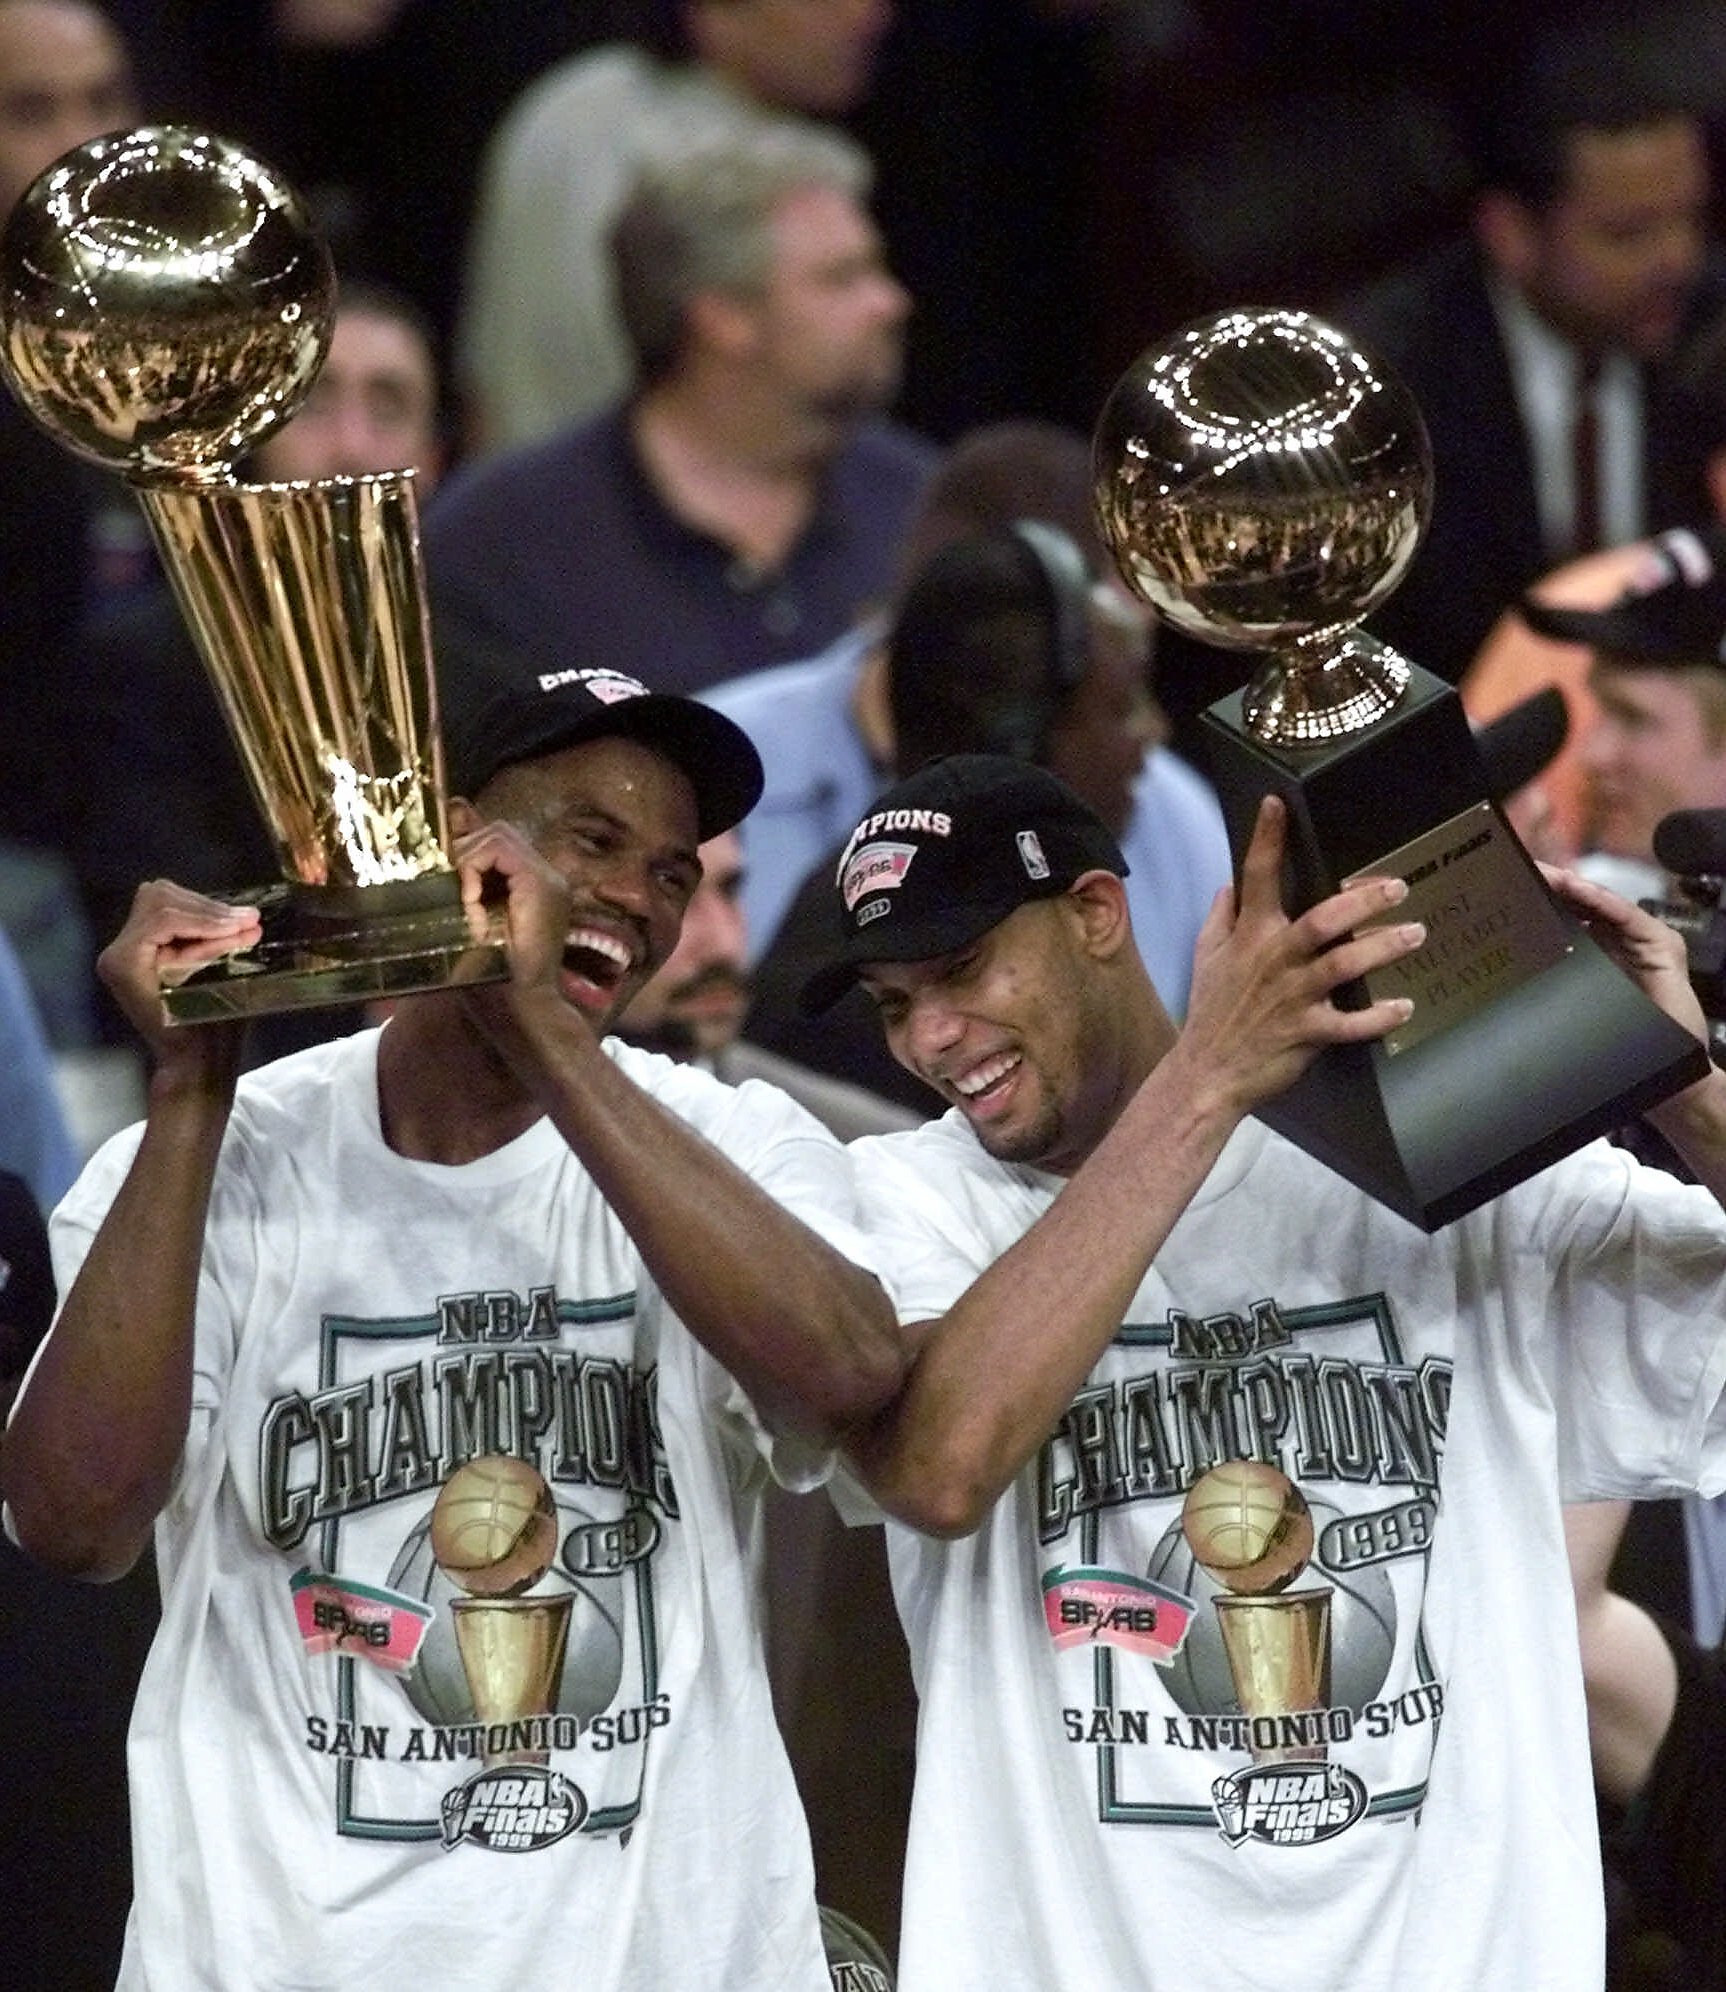 NBAAllStar on X: #TBTTim Duncan and @SHAQ share the trophy as co-MVPs  of the 2000 #NBAAllStar game.  / X